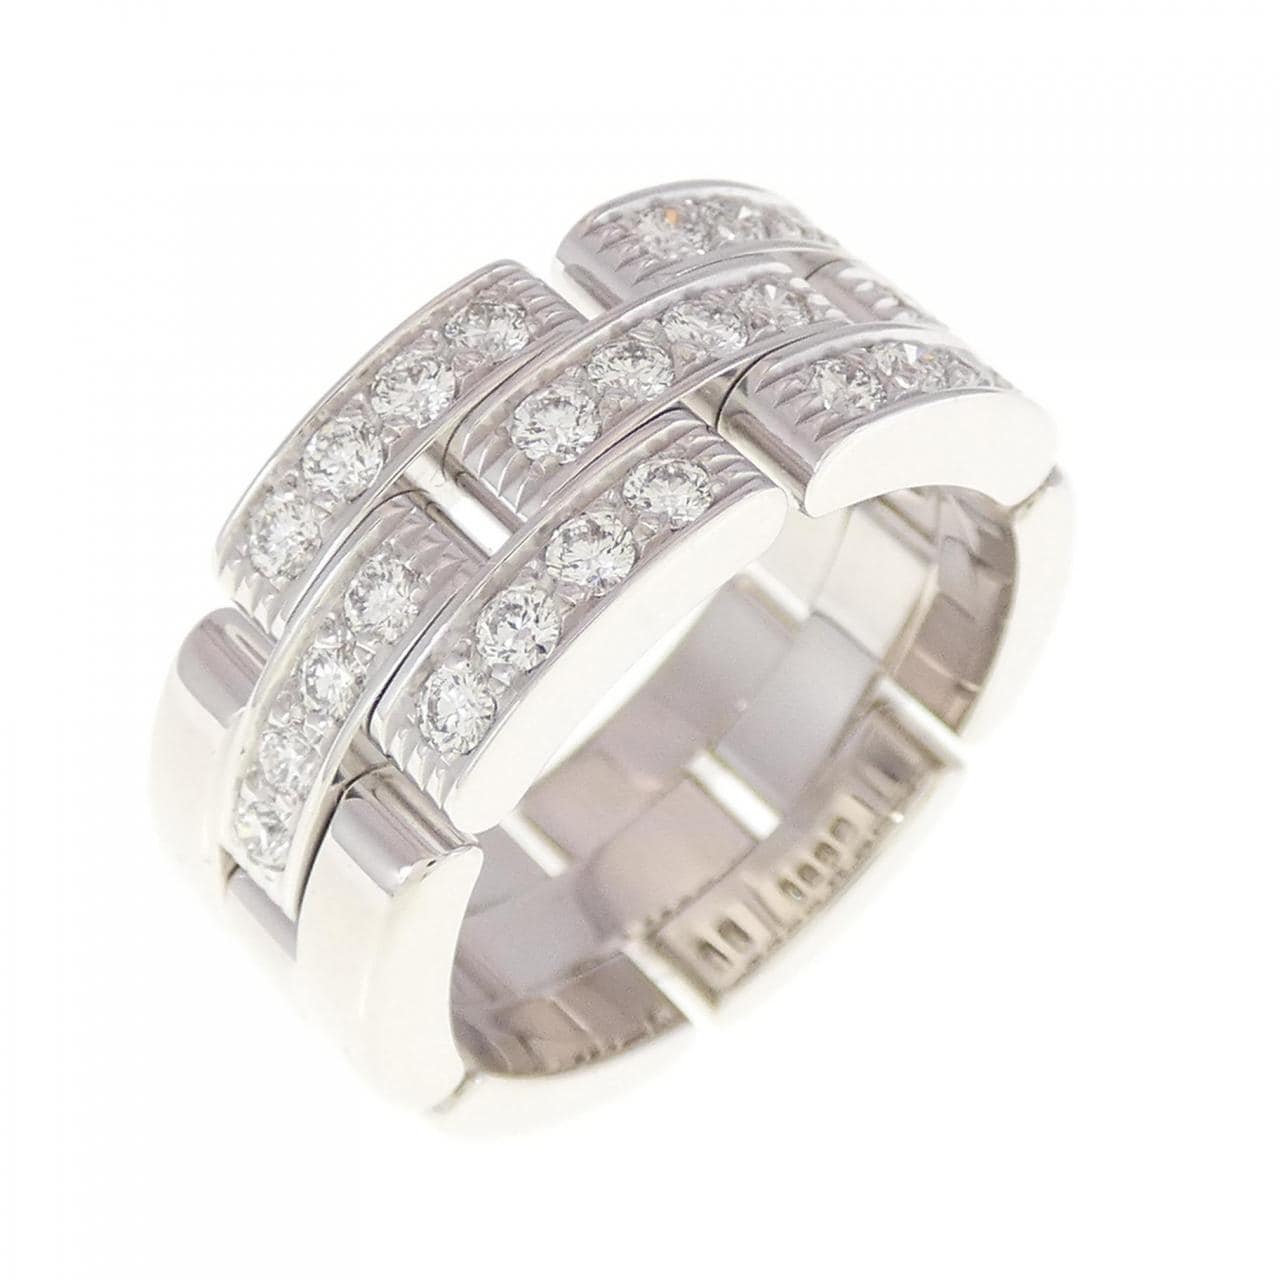 Cartier Maillon panthère half diamond ring